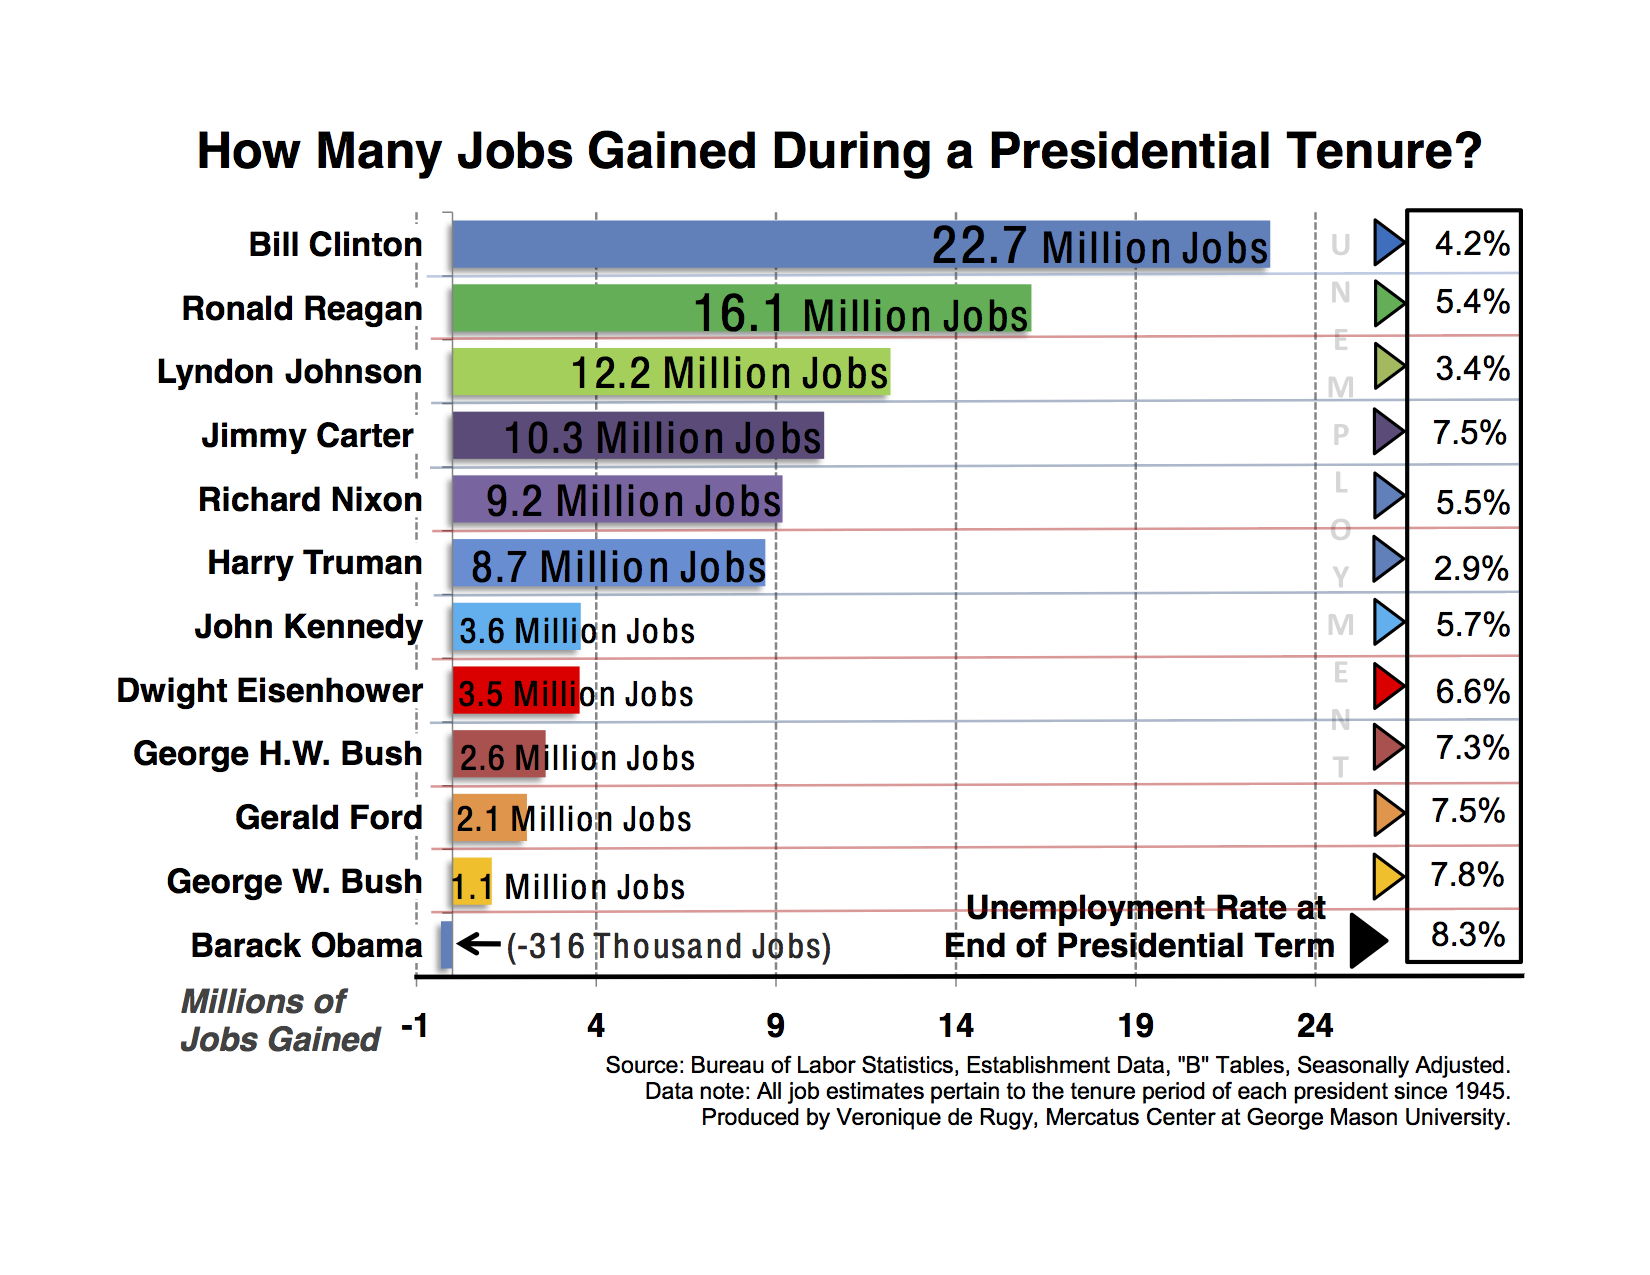 presidents-job-gains-chart-pdf-2%20copy.jpg